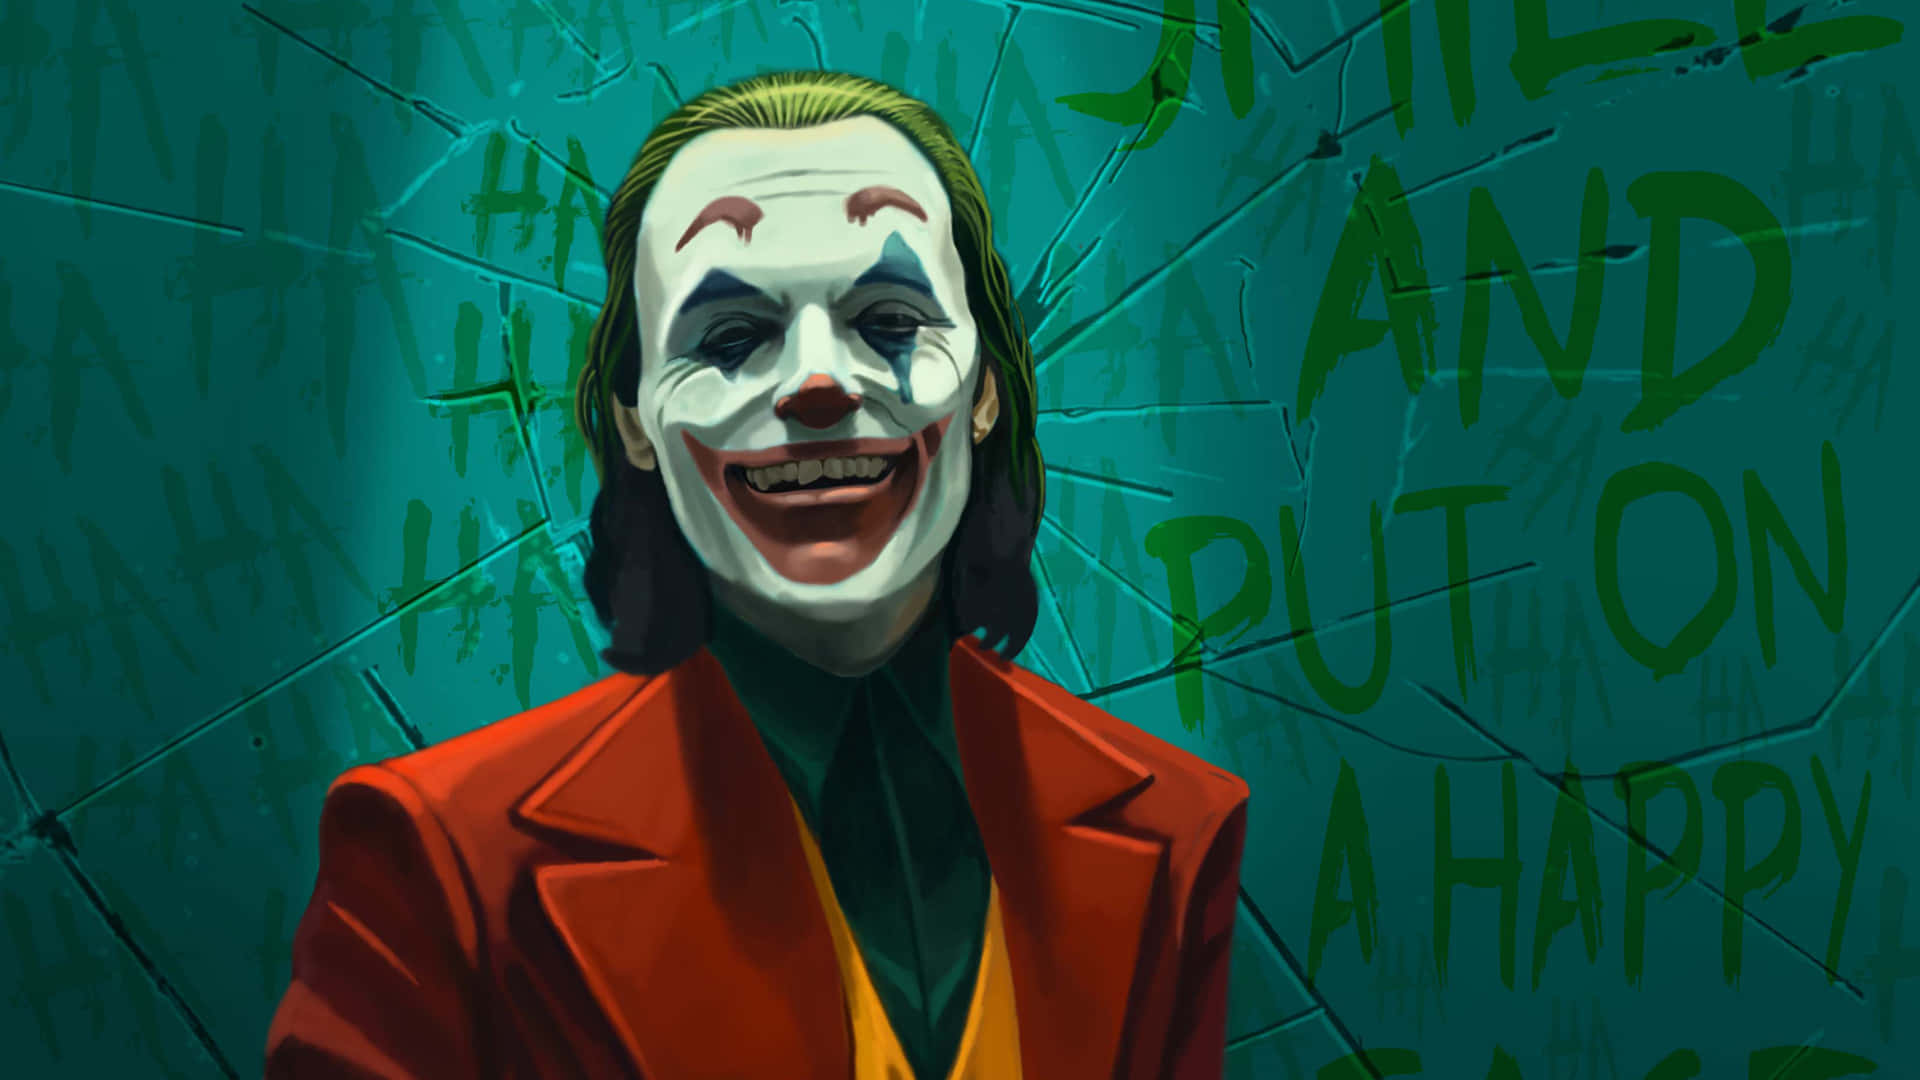 The Joker's Menacing Laughter Background